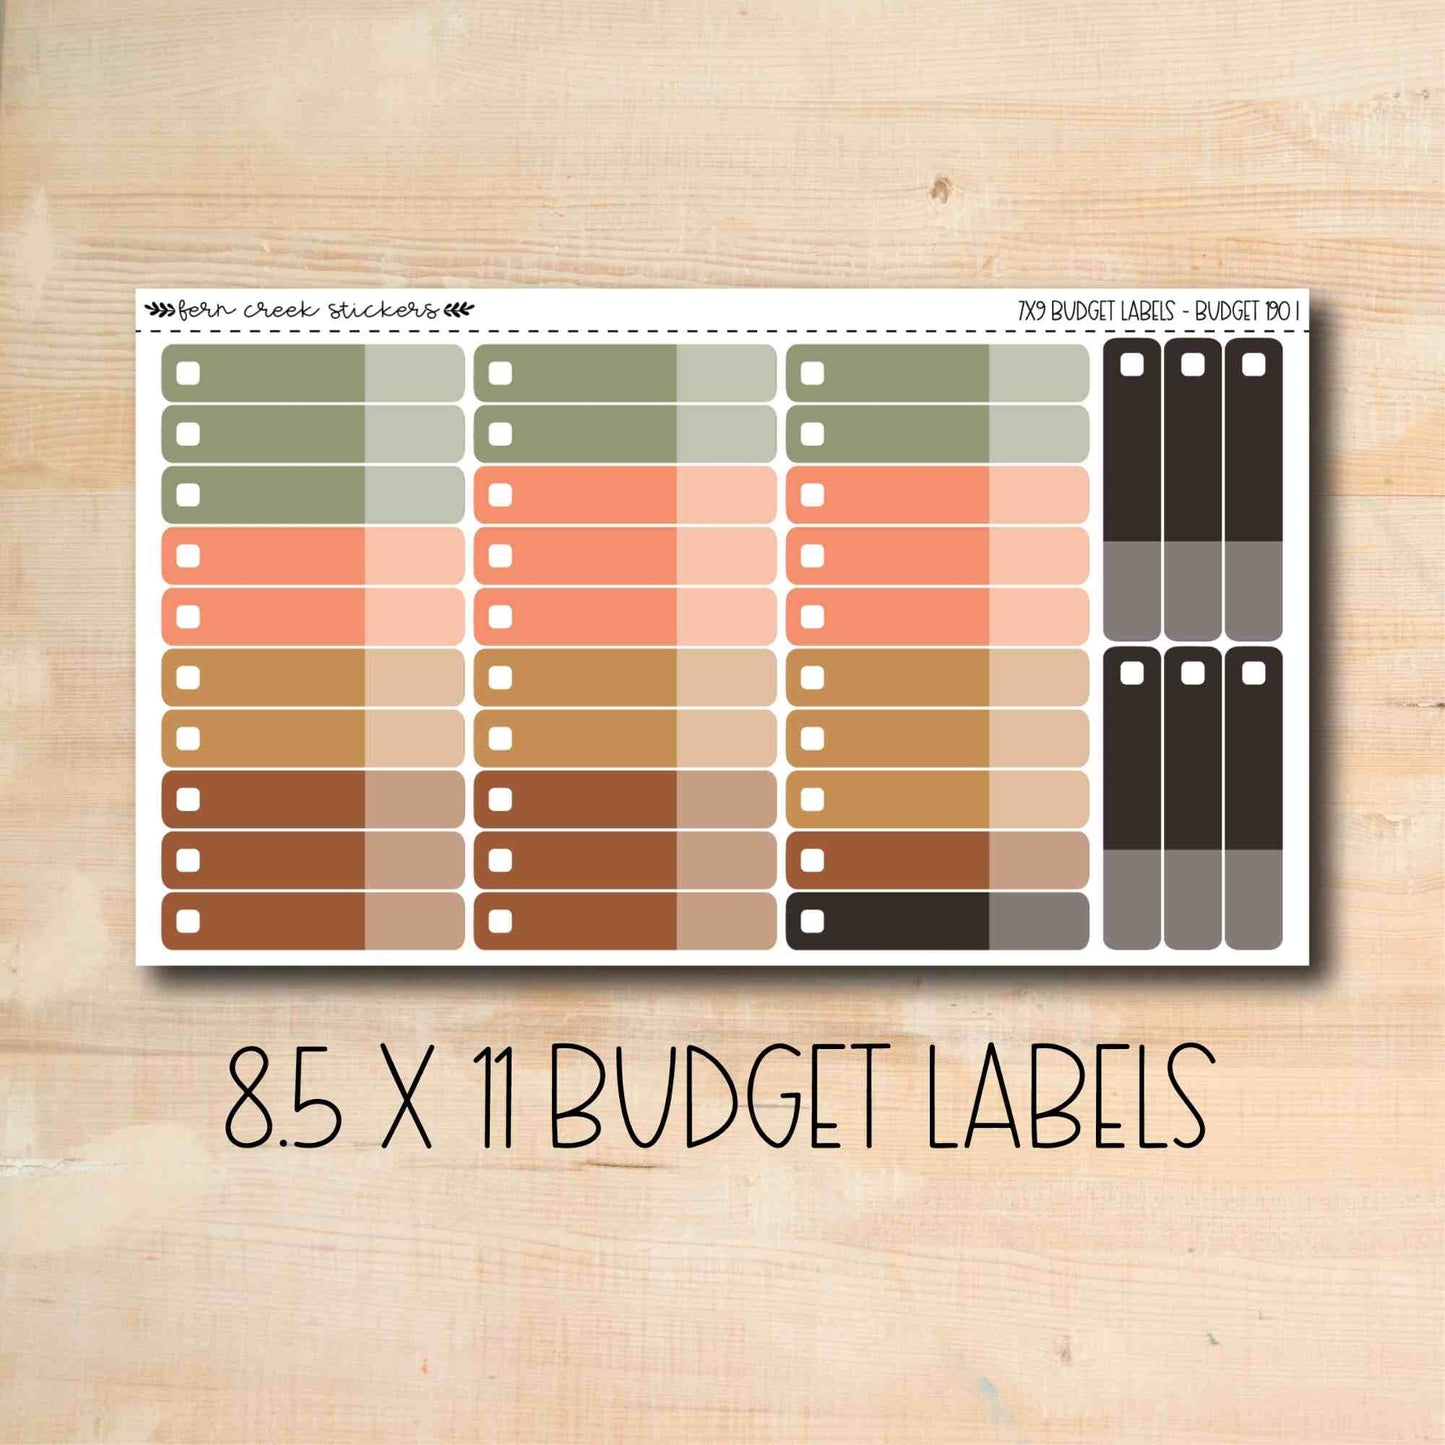 BUDGET-190 || PUMPKIN BLOSSOMS 8.5x11 budget labels